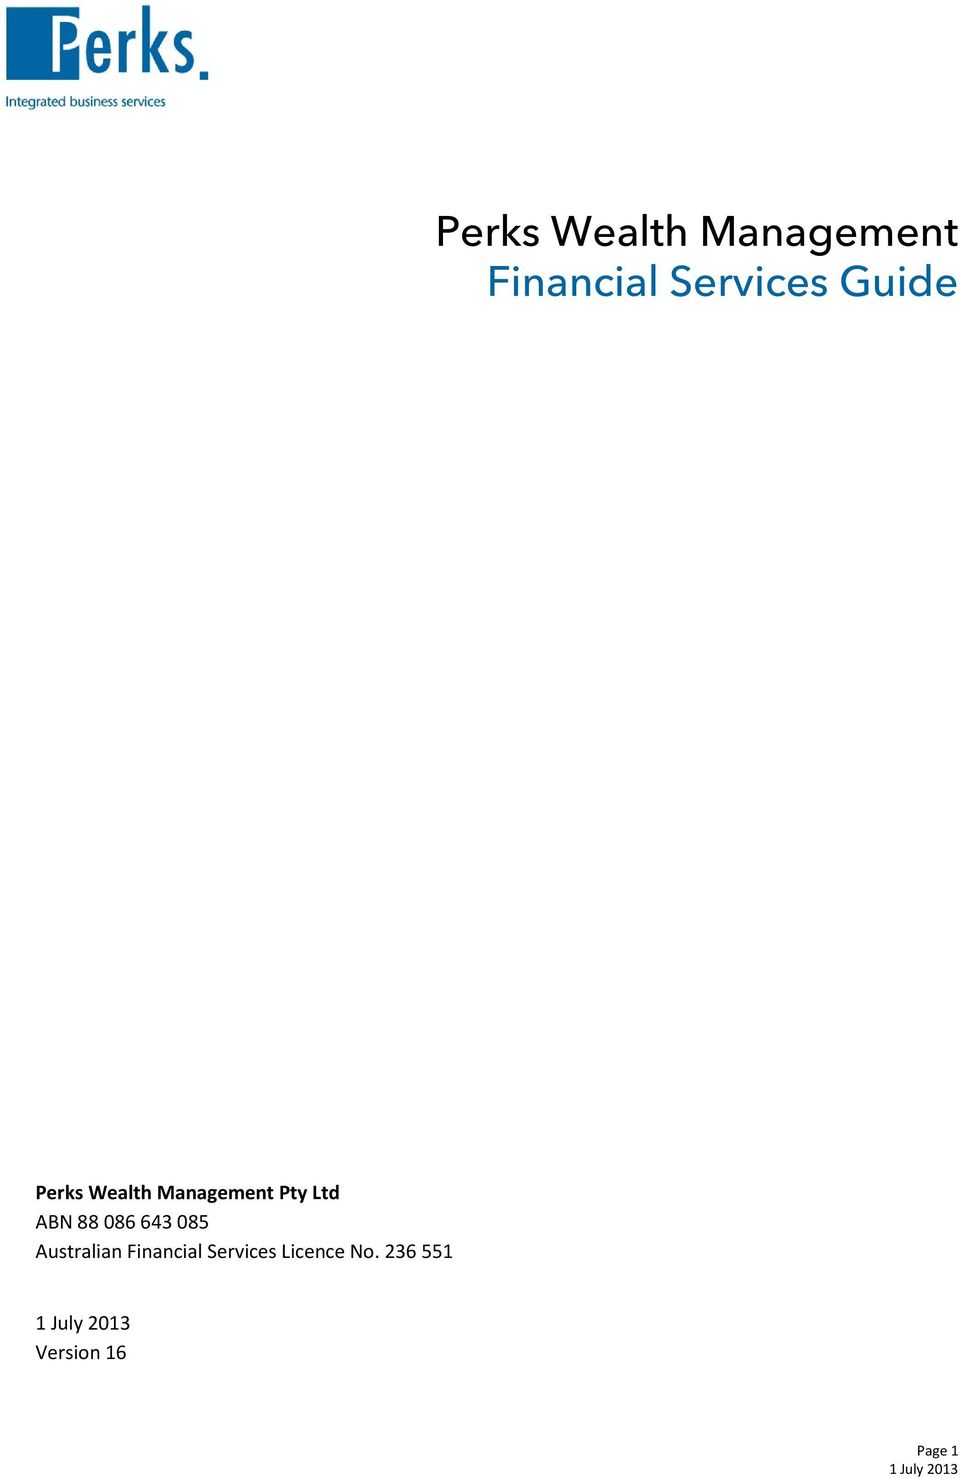 Australian Financial Services